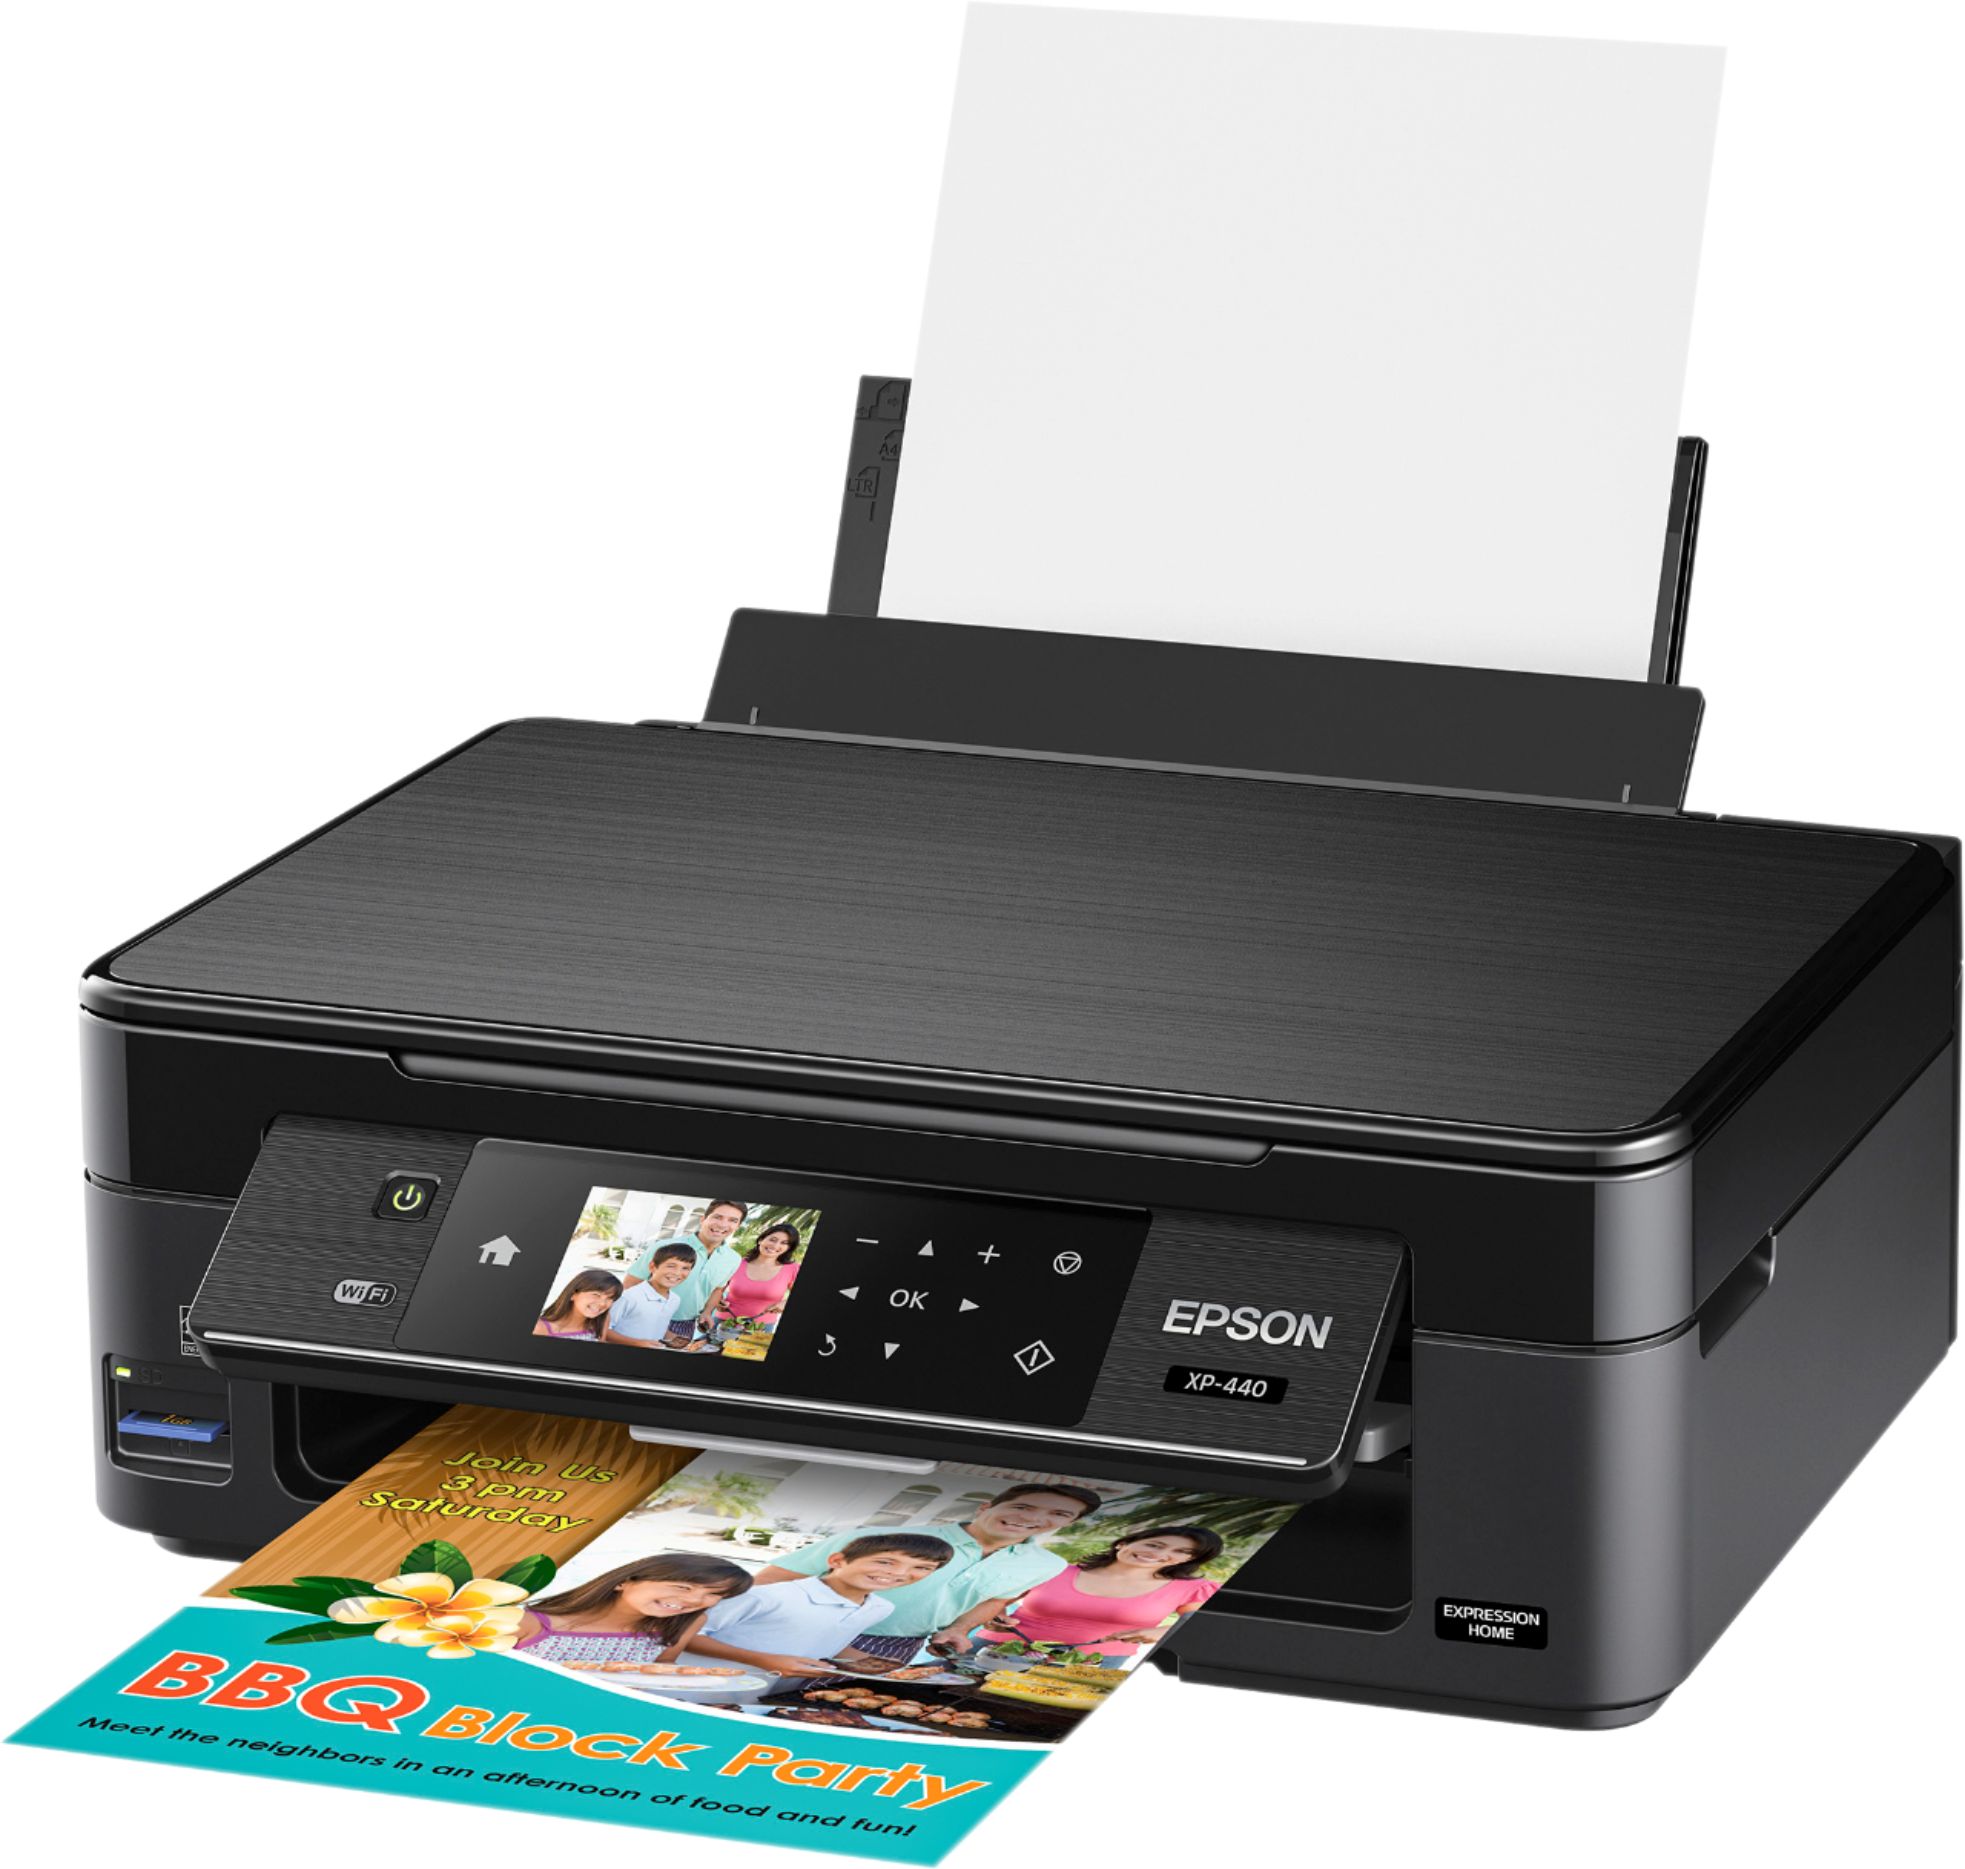 Epson Expression Home XP-2200 Inkjet Multifunction Printer